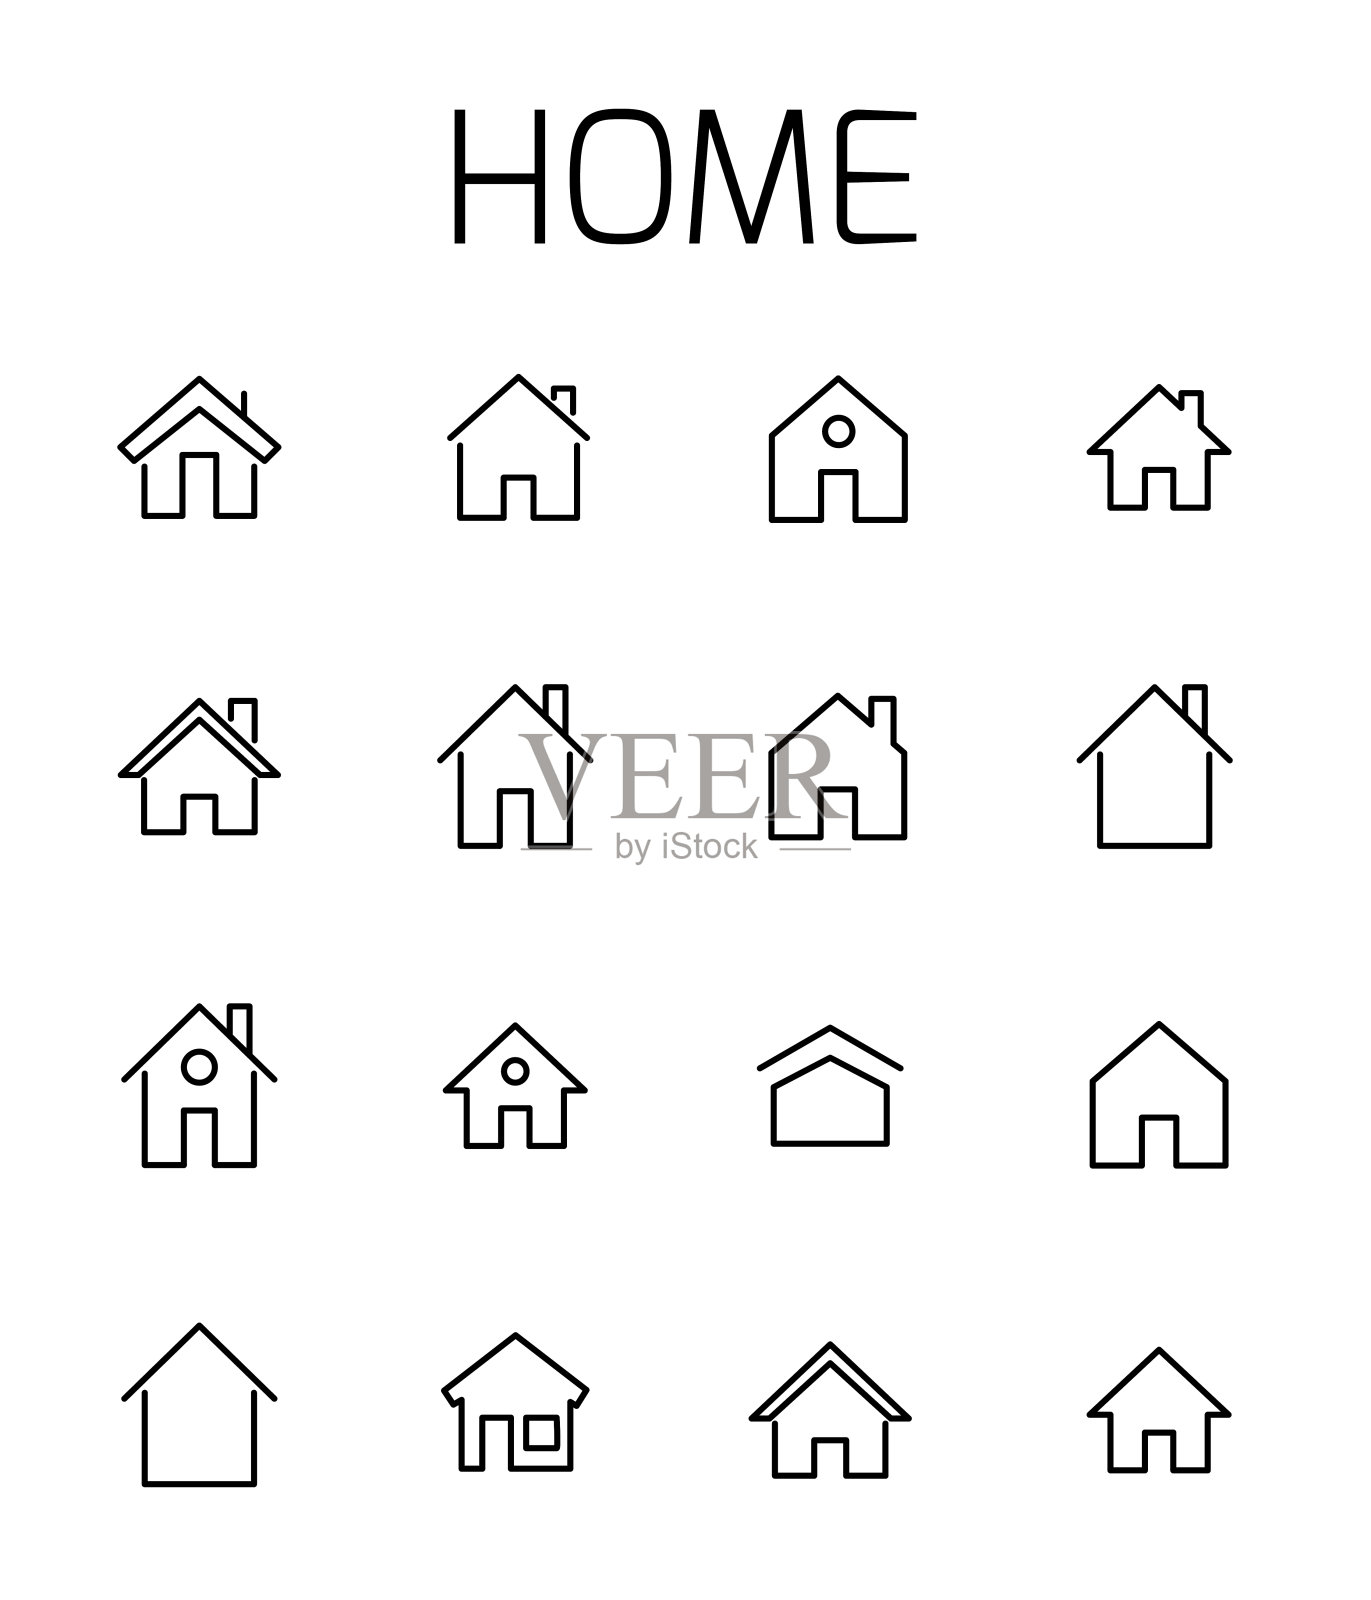 Home相关矢量图标集。图标素材